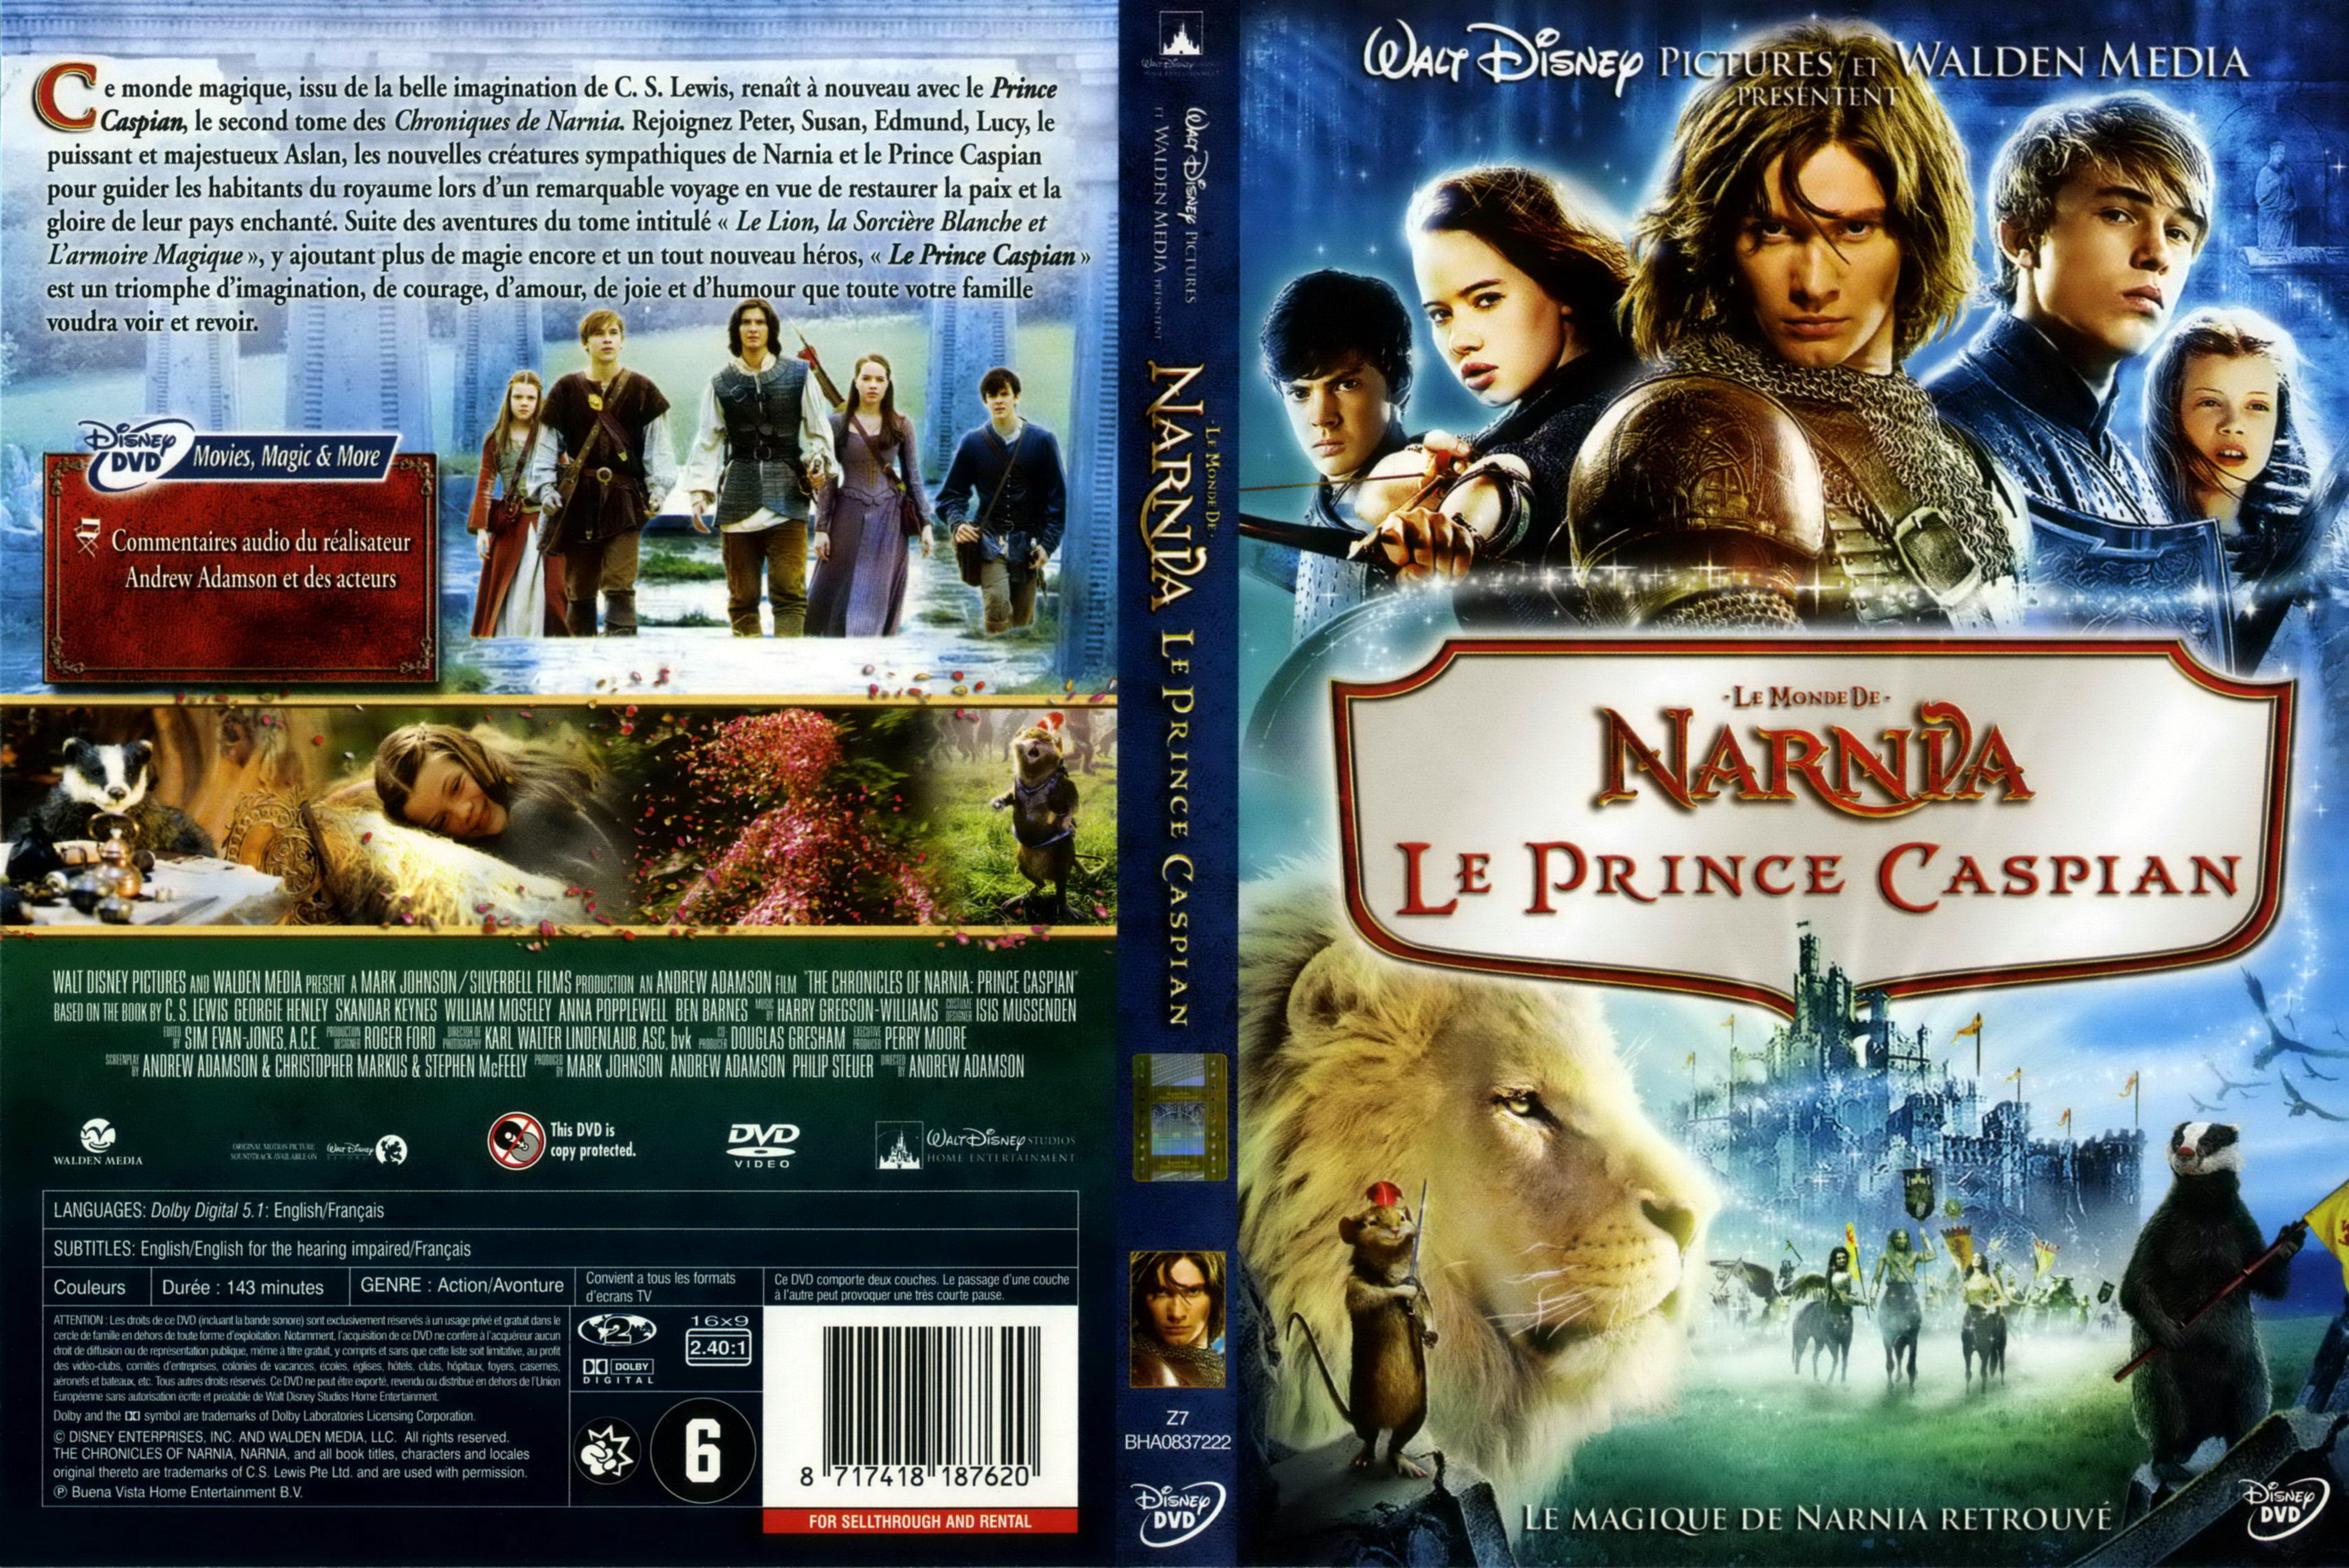 Jaquette DVD Le Monde de Narnia chapitre 2 - Prince Caspian v2